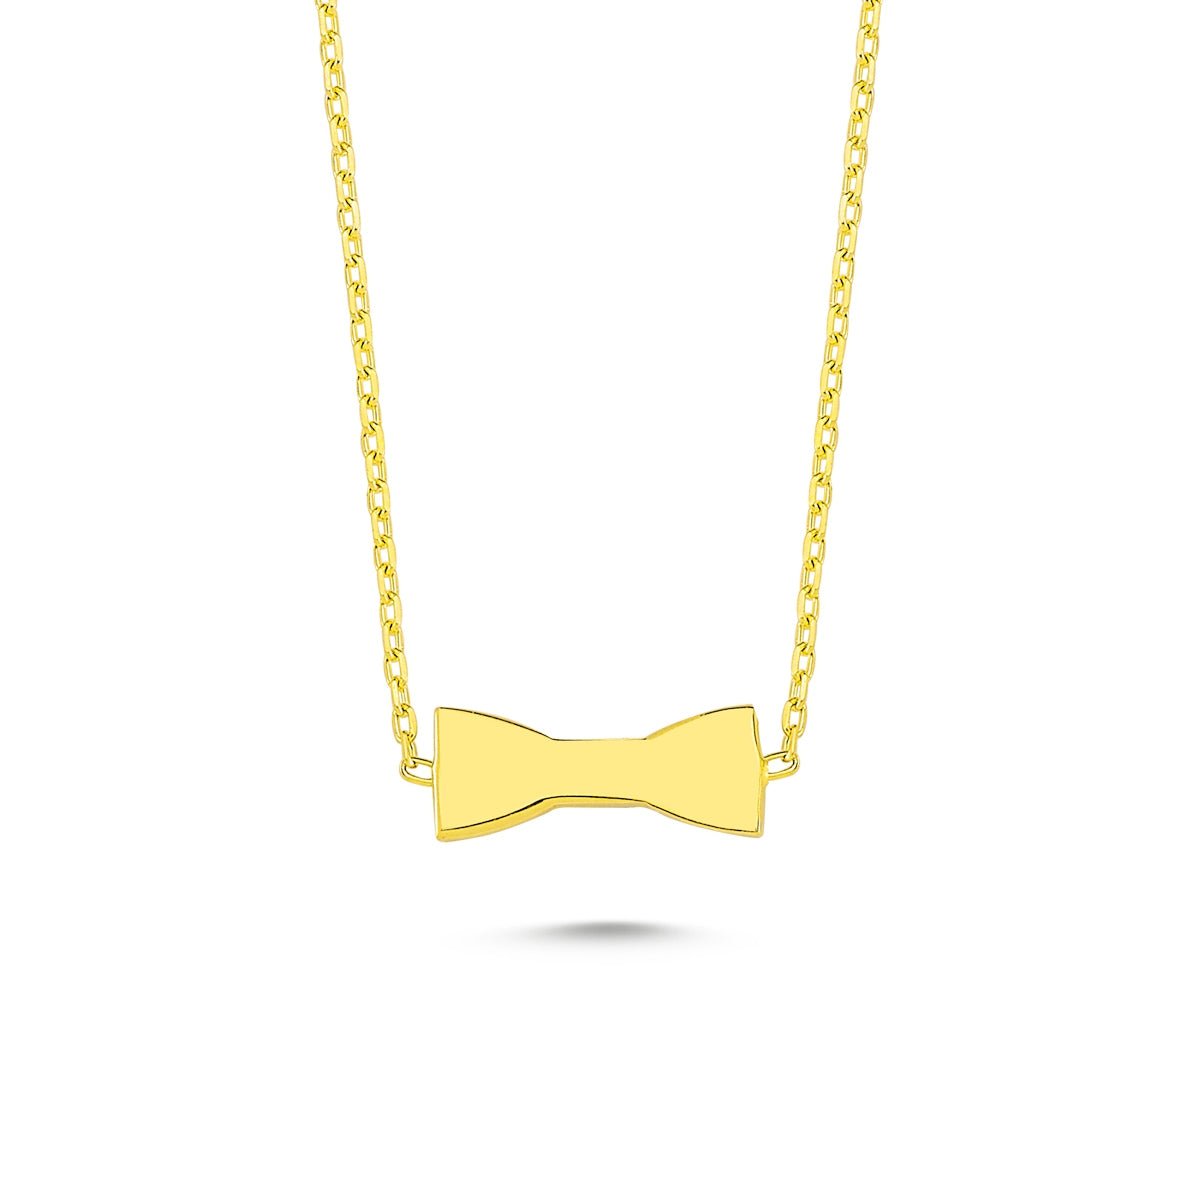 Bow Tie Necklace - amoriumjewelry